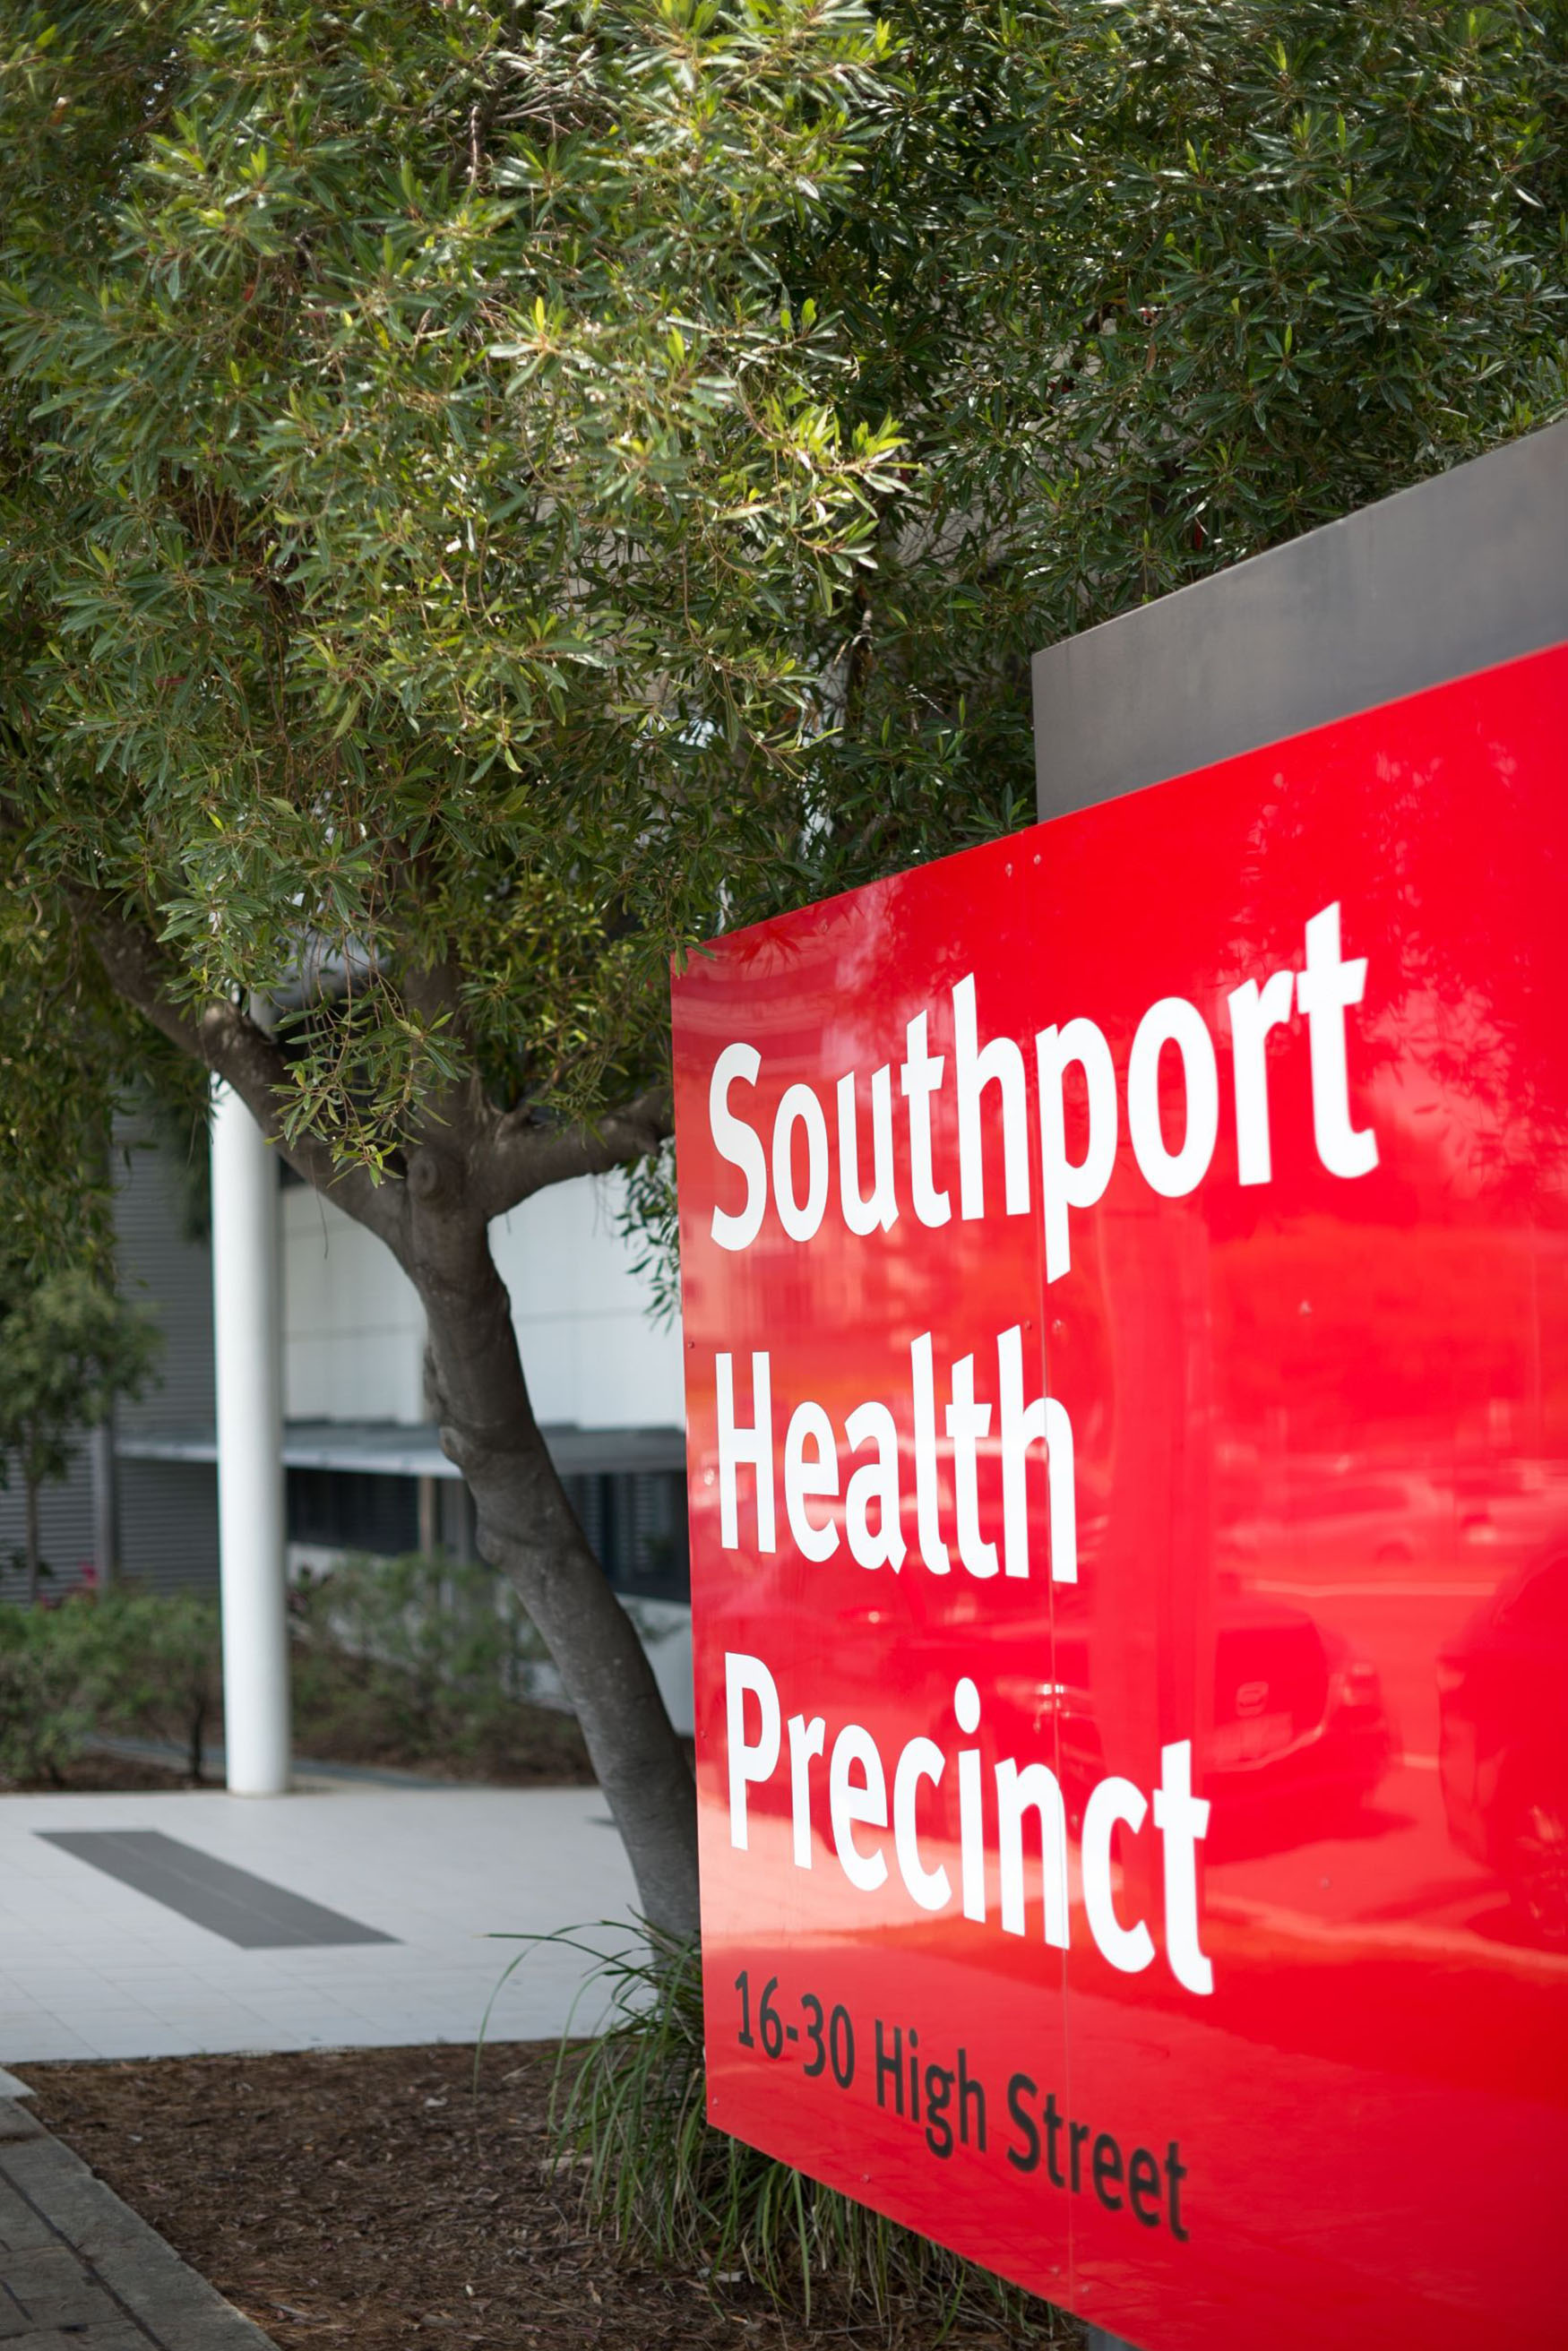 Southport Health Precinct